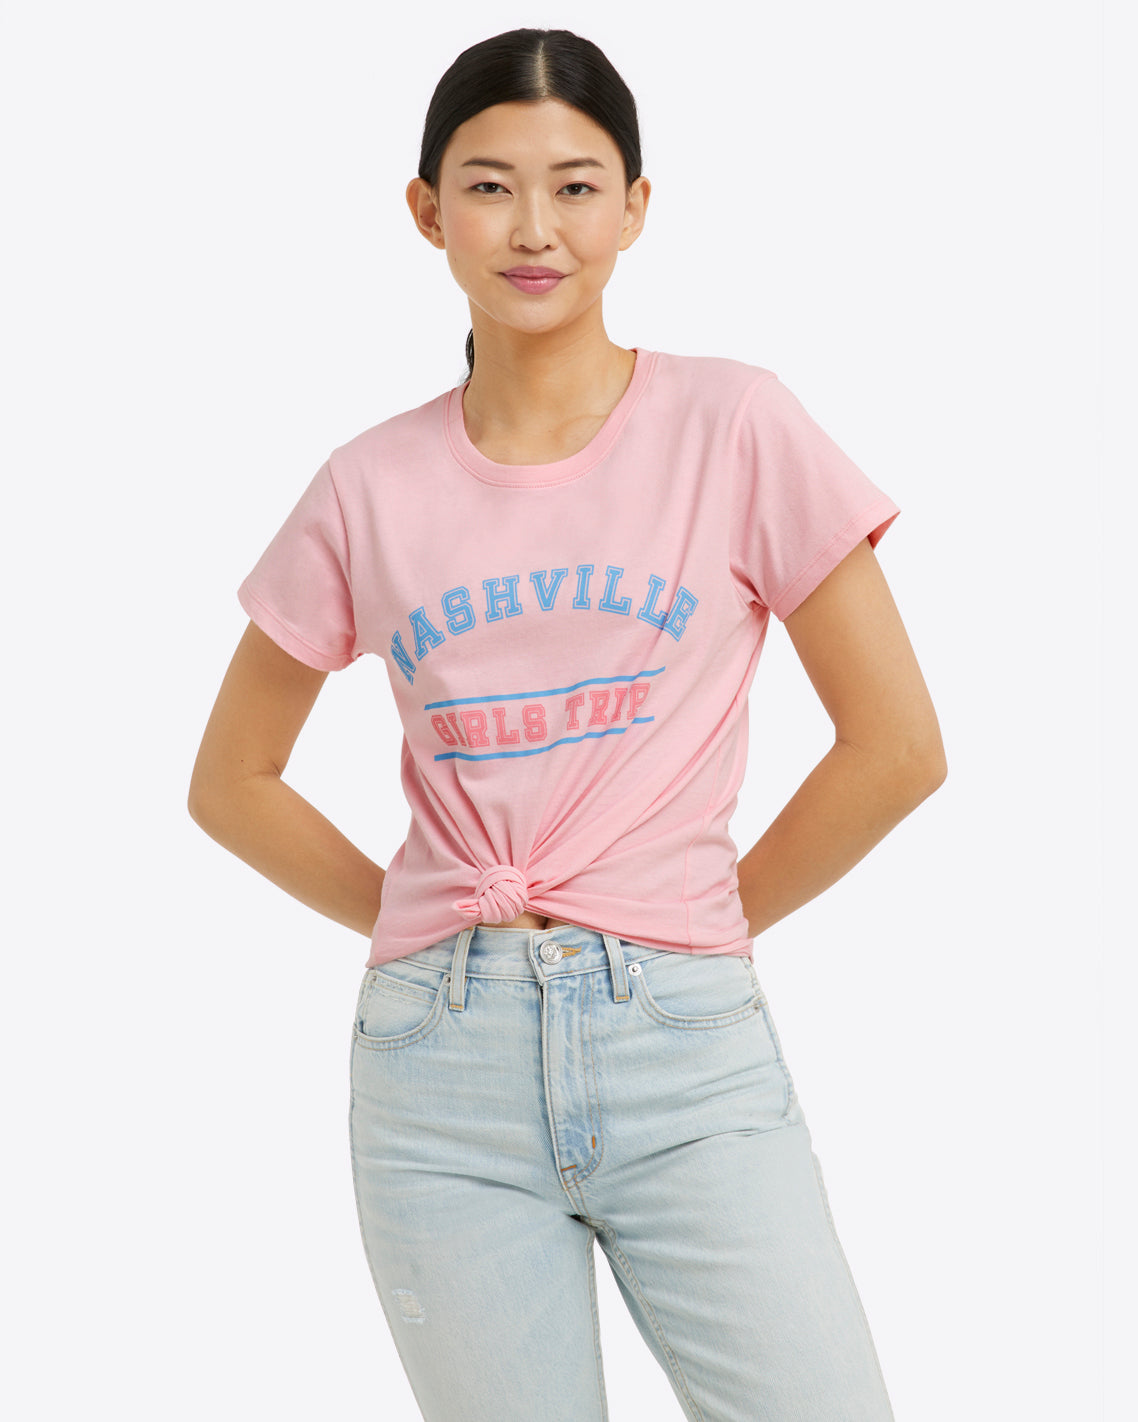 Nashville Girls Trip T-Shirt